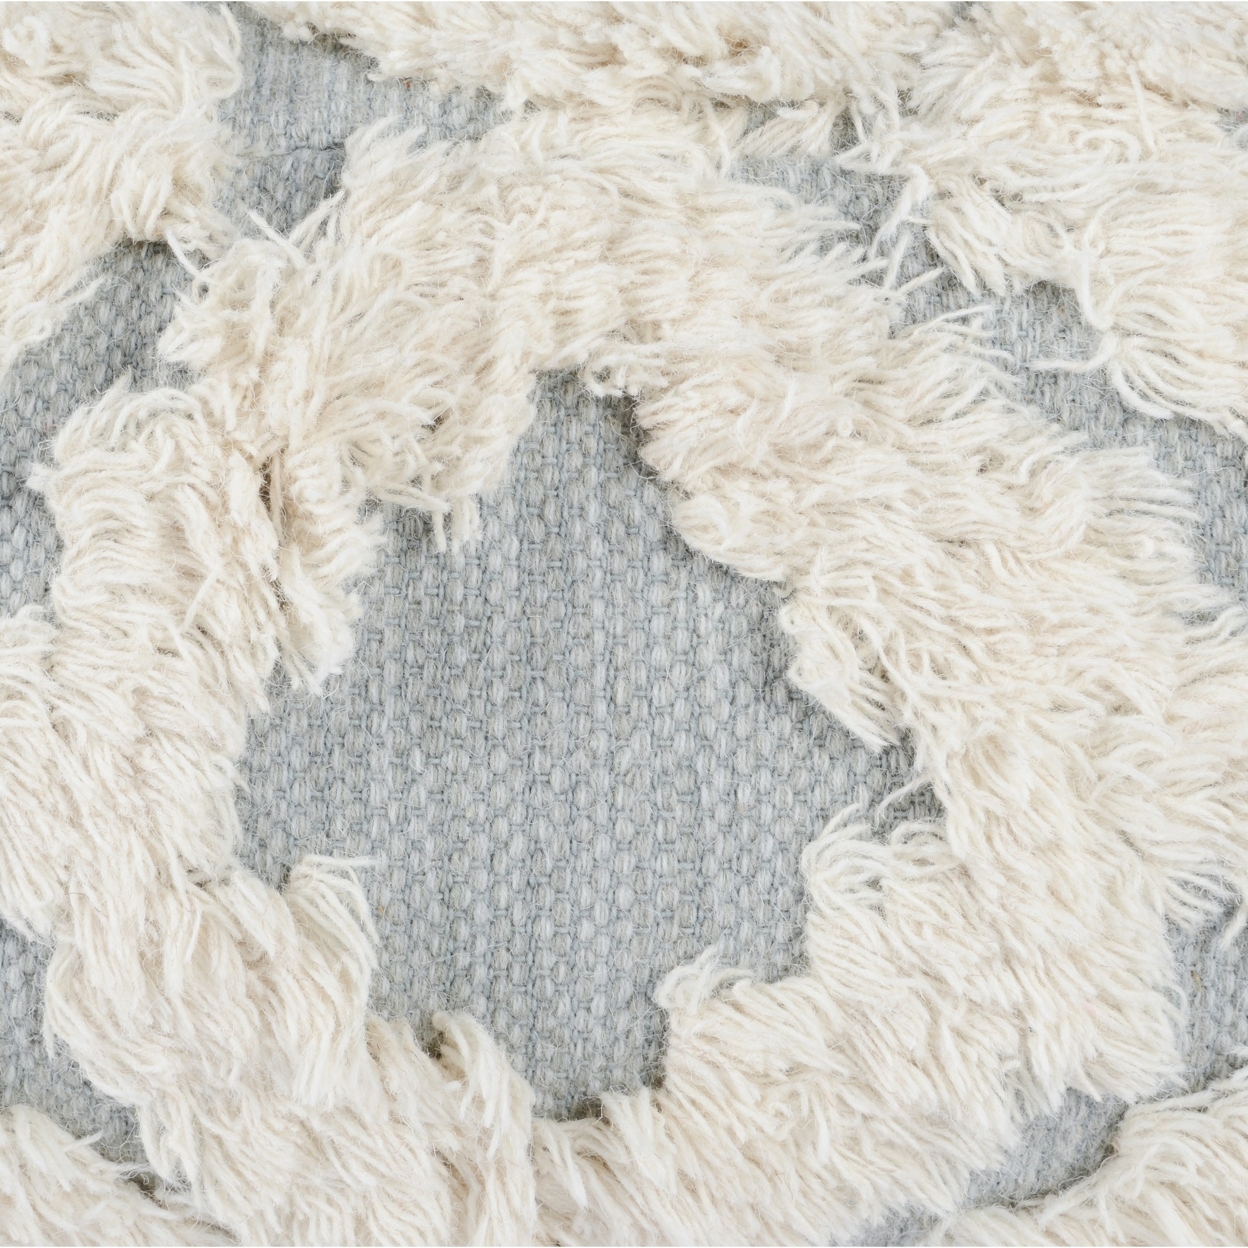 24 Inch Classic Wool Sqaure Pouf, Wide Design, Handwoven Texture, Gray, Saltoro Sherpi